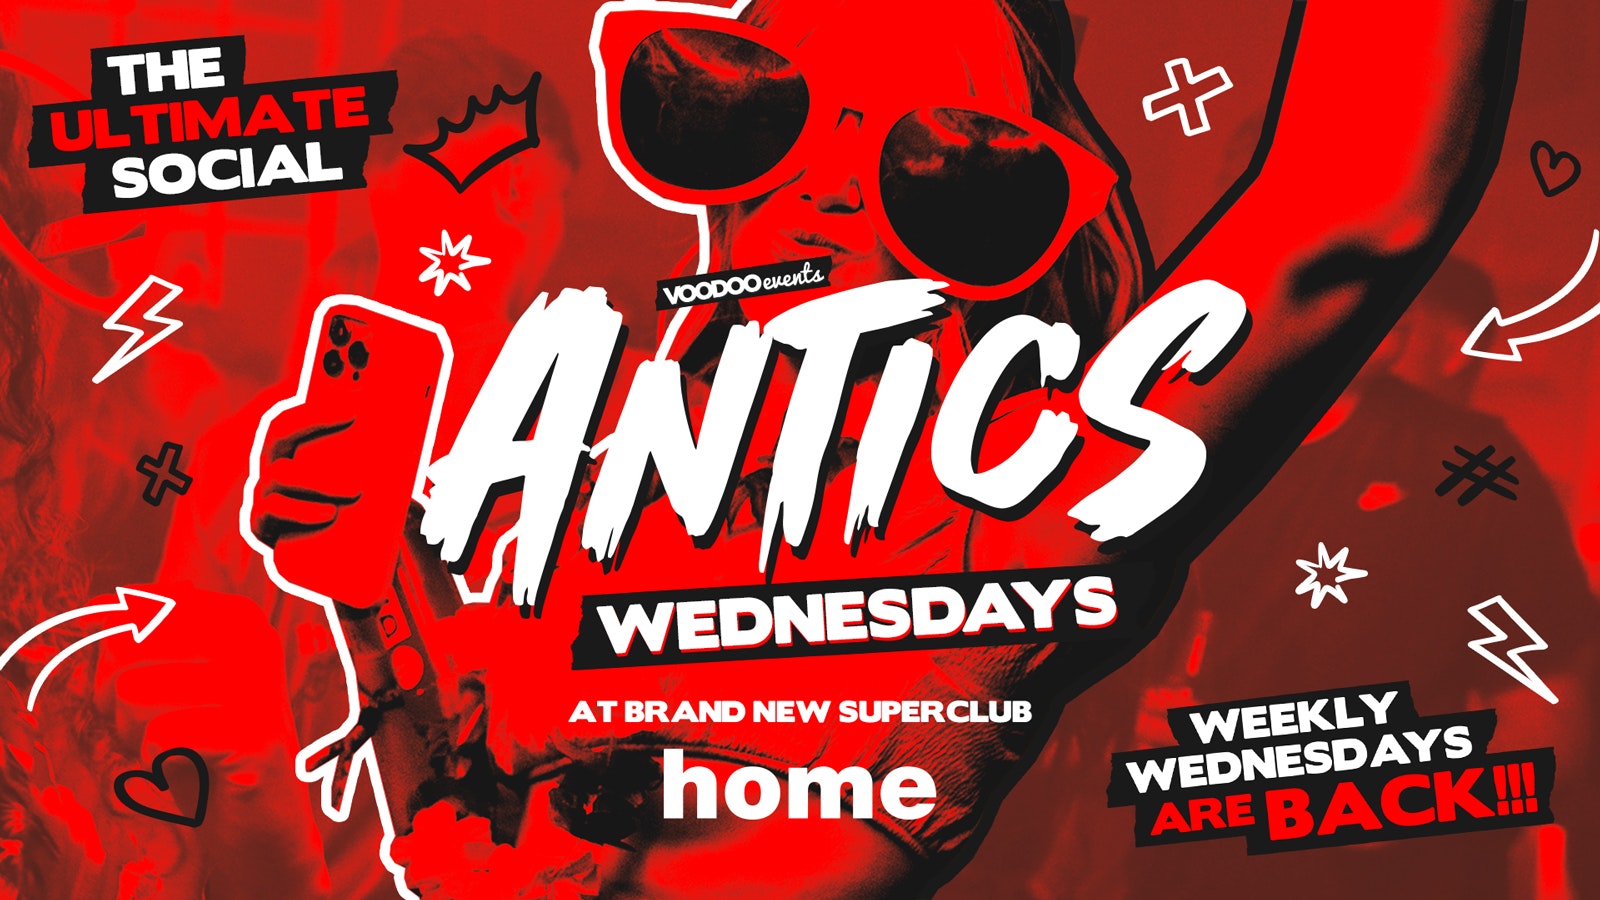 Antics @ THE BRAND NEW SUPER CLUB HOME – Wednesday 12th June